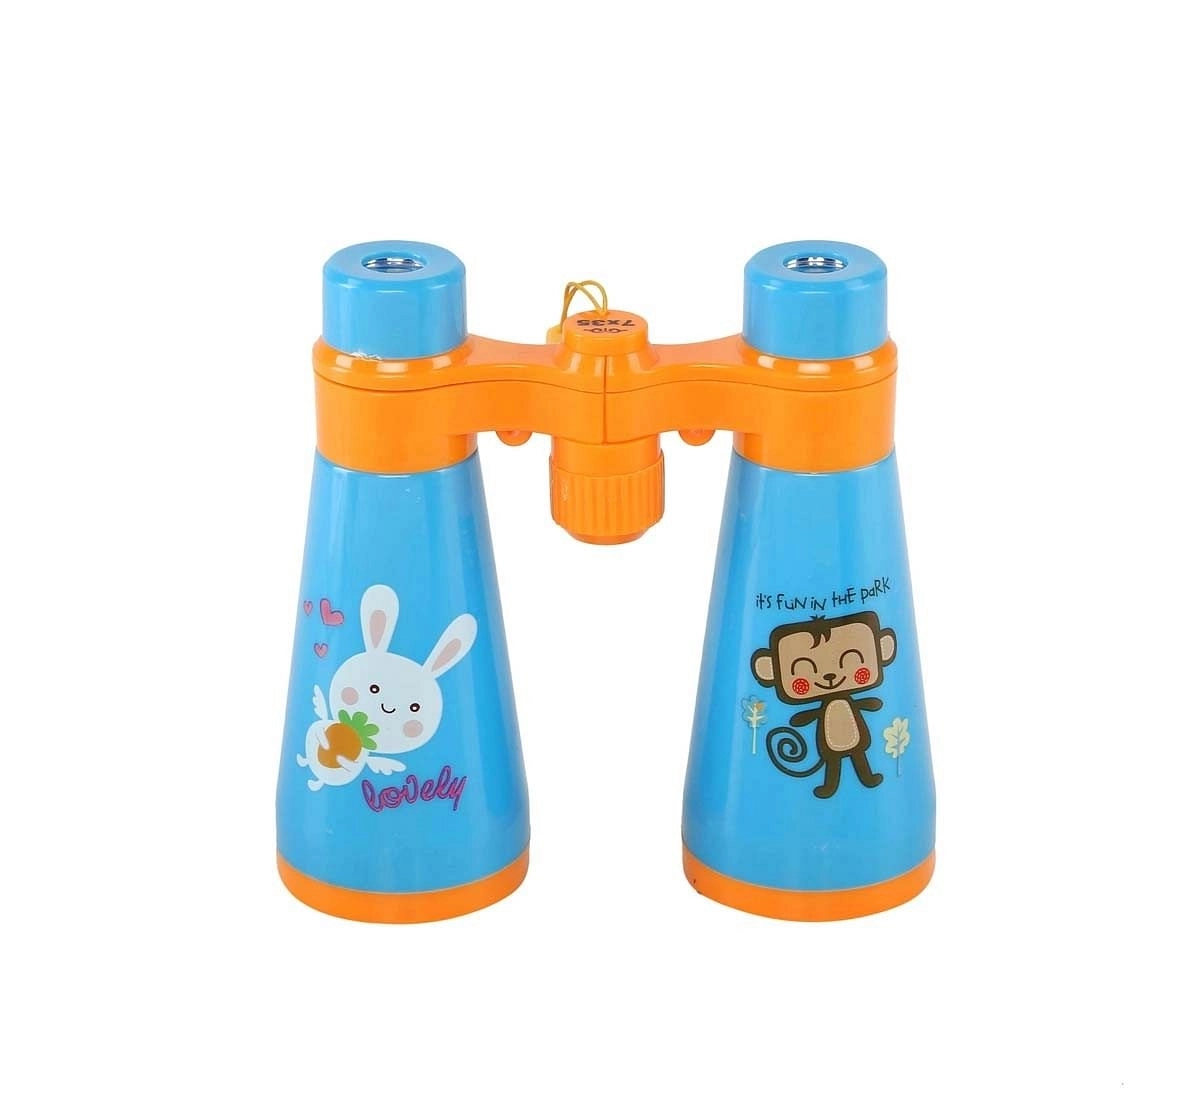 Comdaq Binoculars, Multi Color Science Equipments for Kids age 3Y+ 